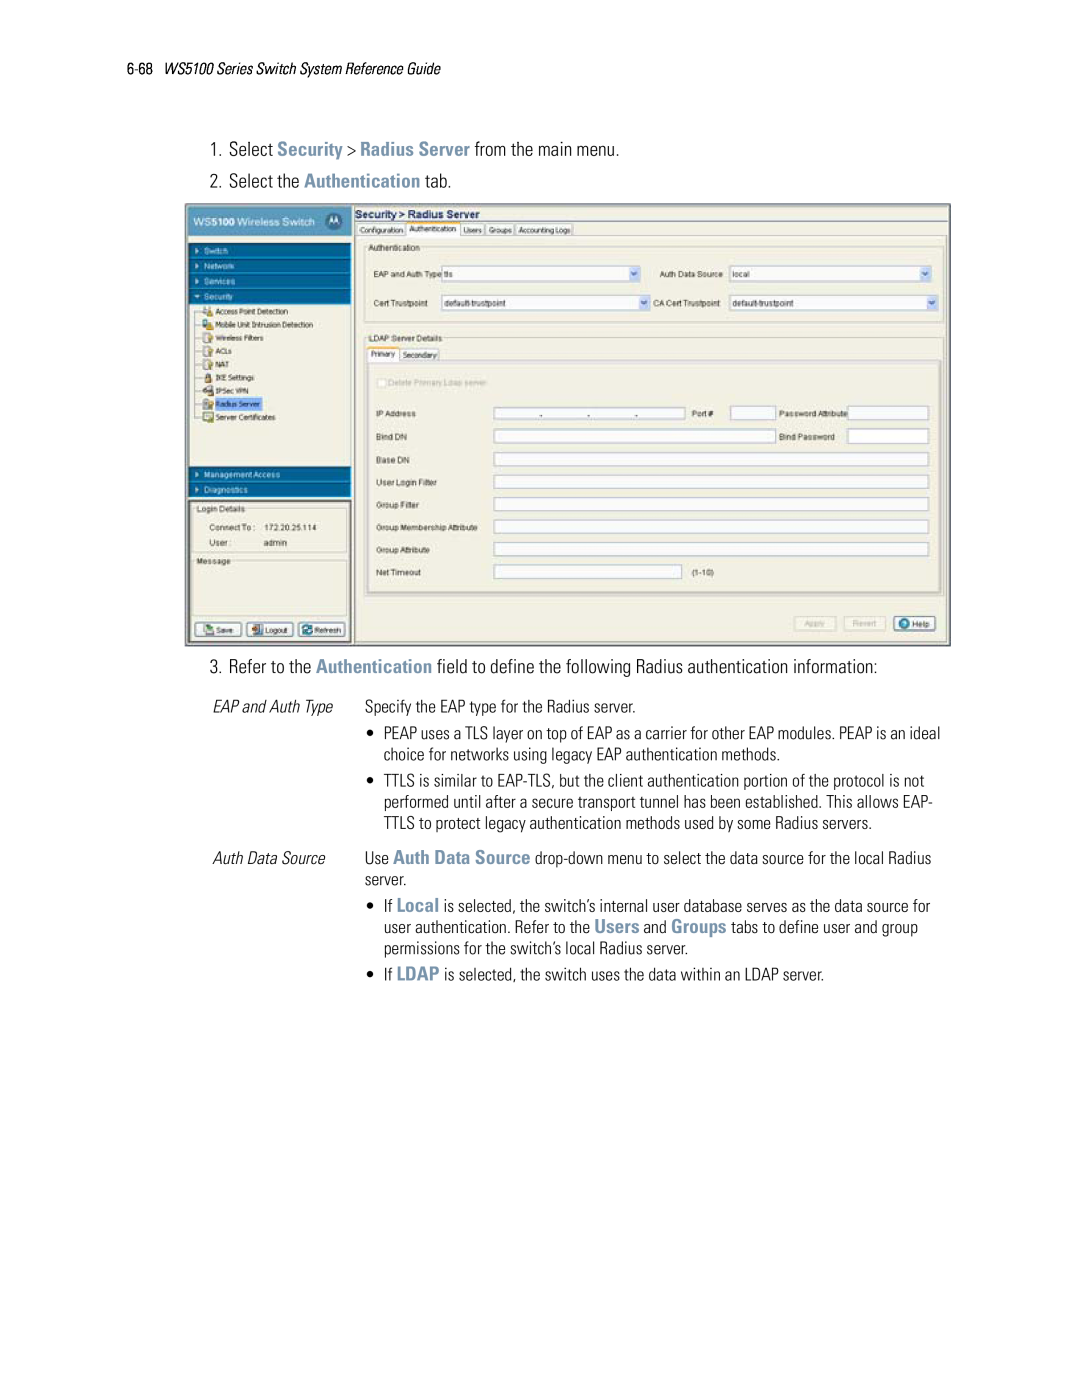 Motorola WS5100 manual Select the Authentication tab 